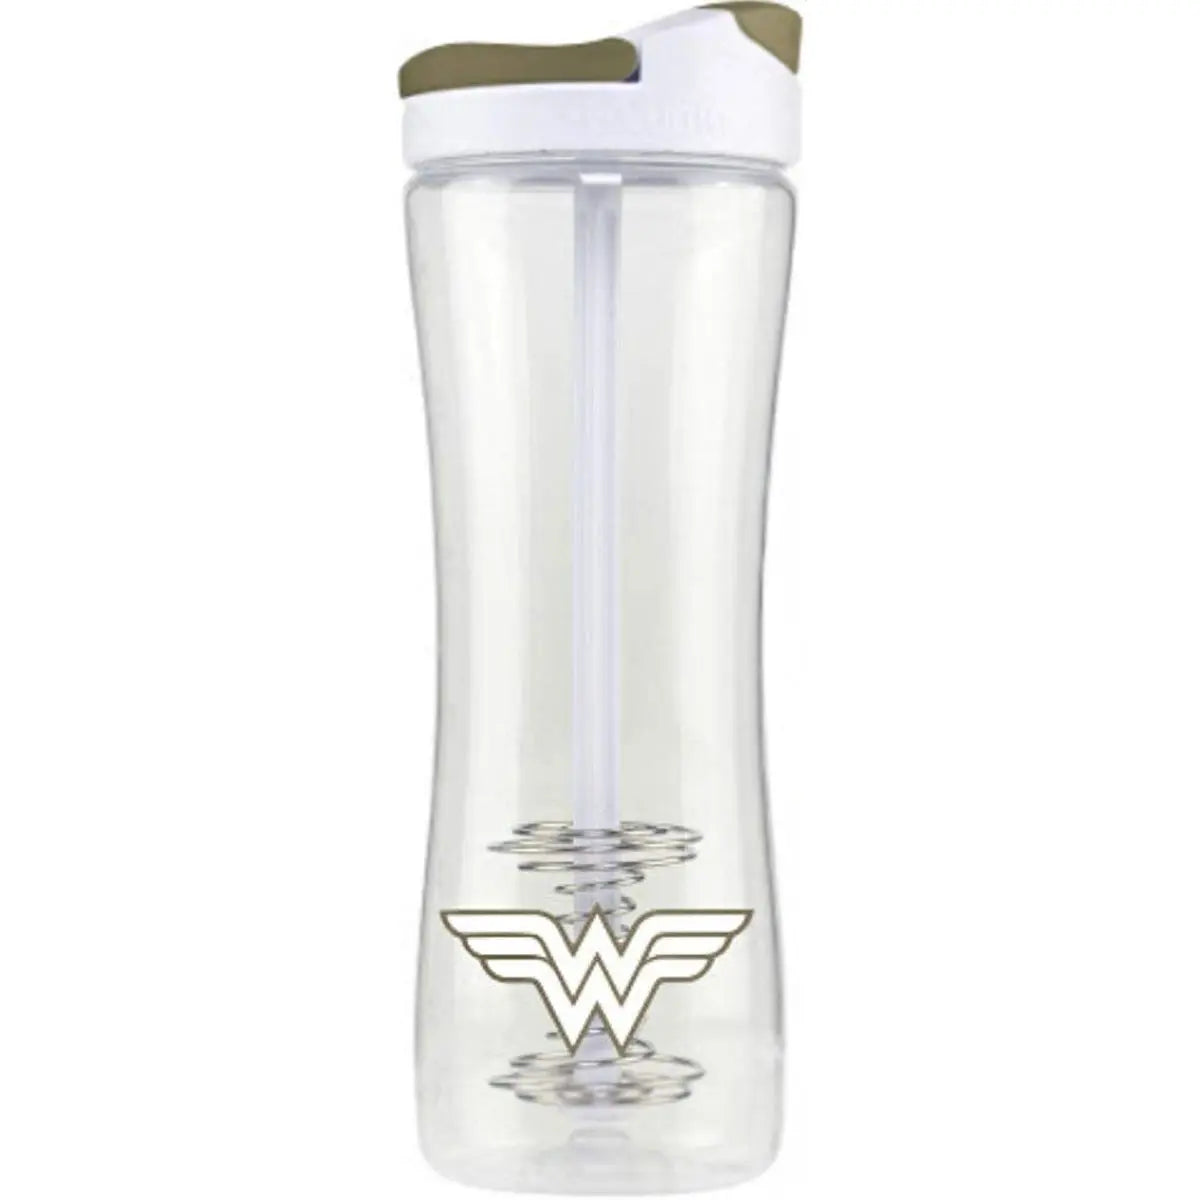 Performa Luma 28 oz. Wonder Woman Shaker Cup - White/Gold Performa